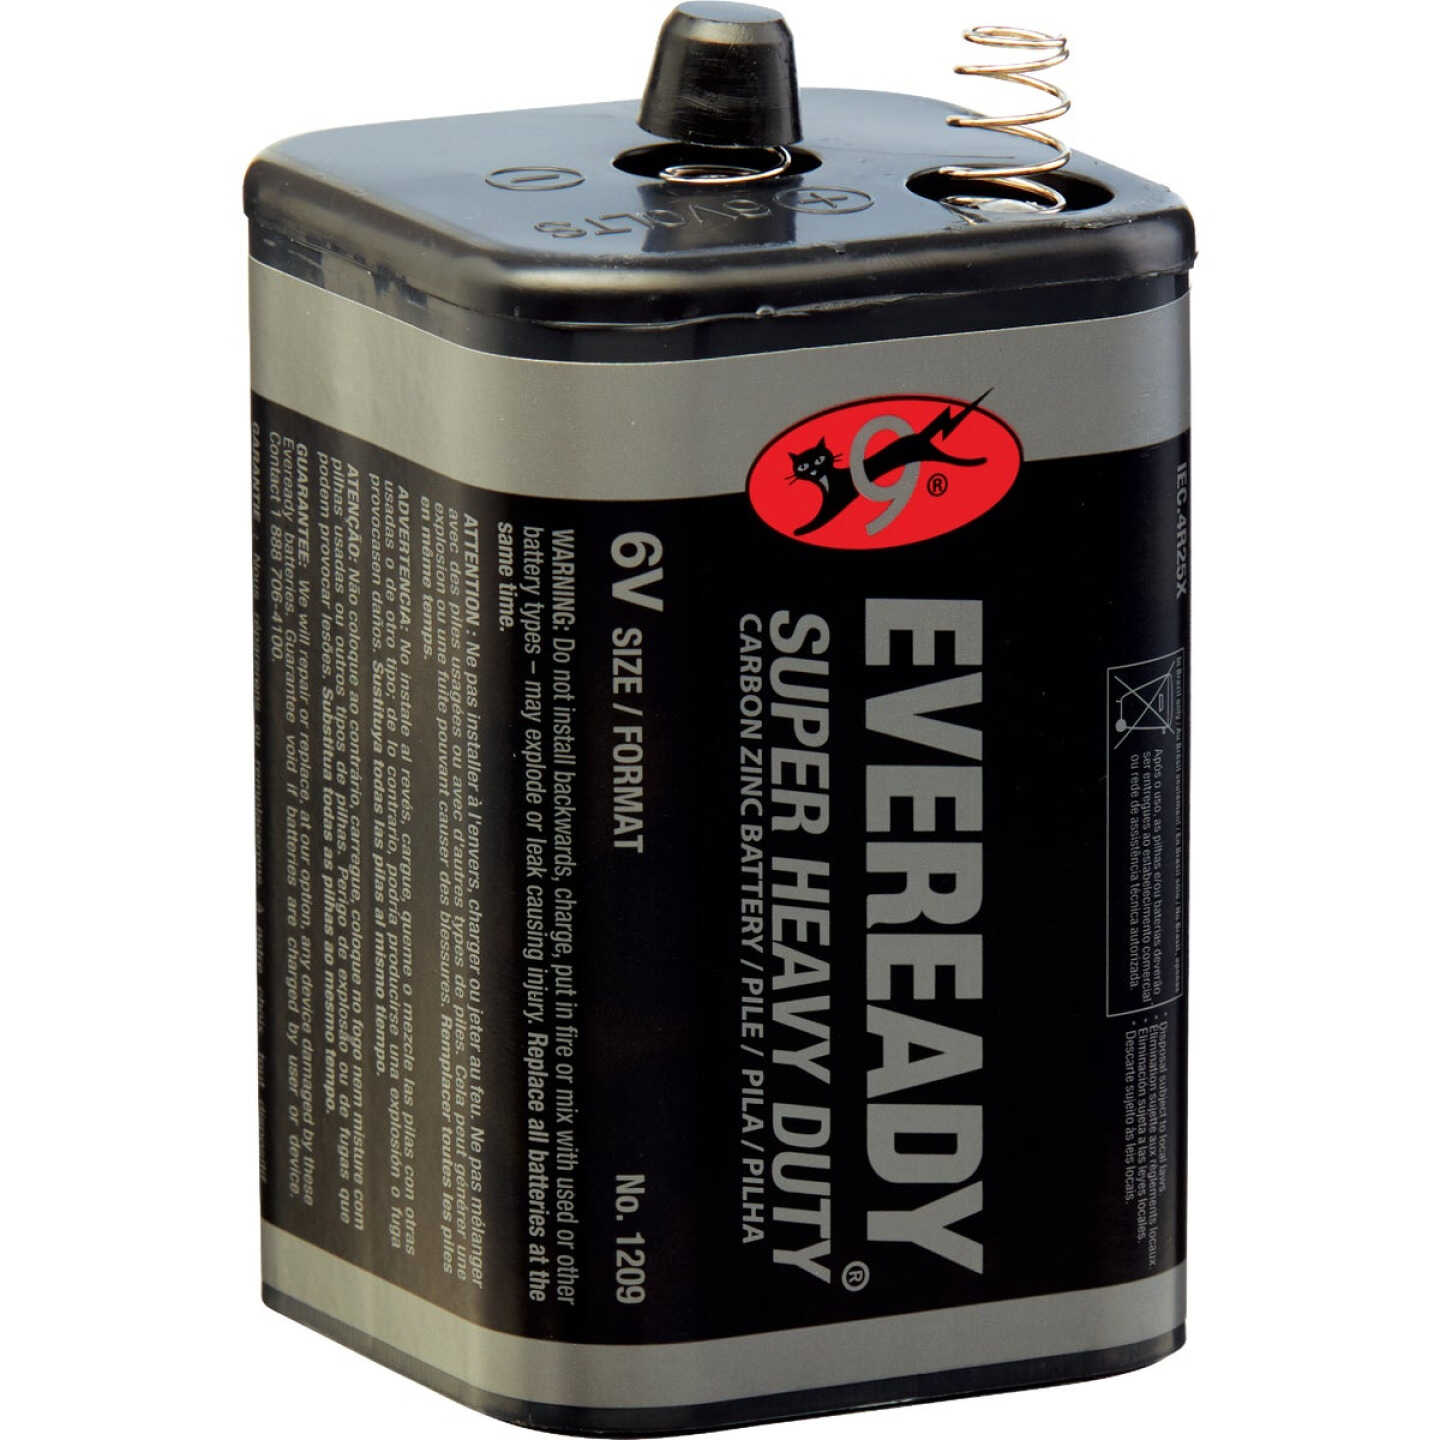 Eveready 6V Spring Terminal Zinc Lantern Battery - Endicott, NY - Owego, NY  - Owego Endicott Agway